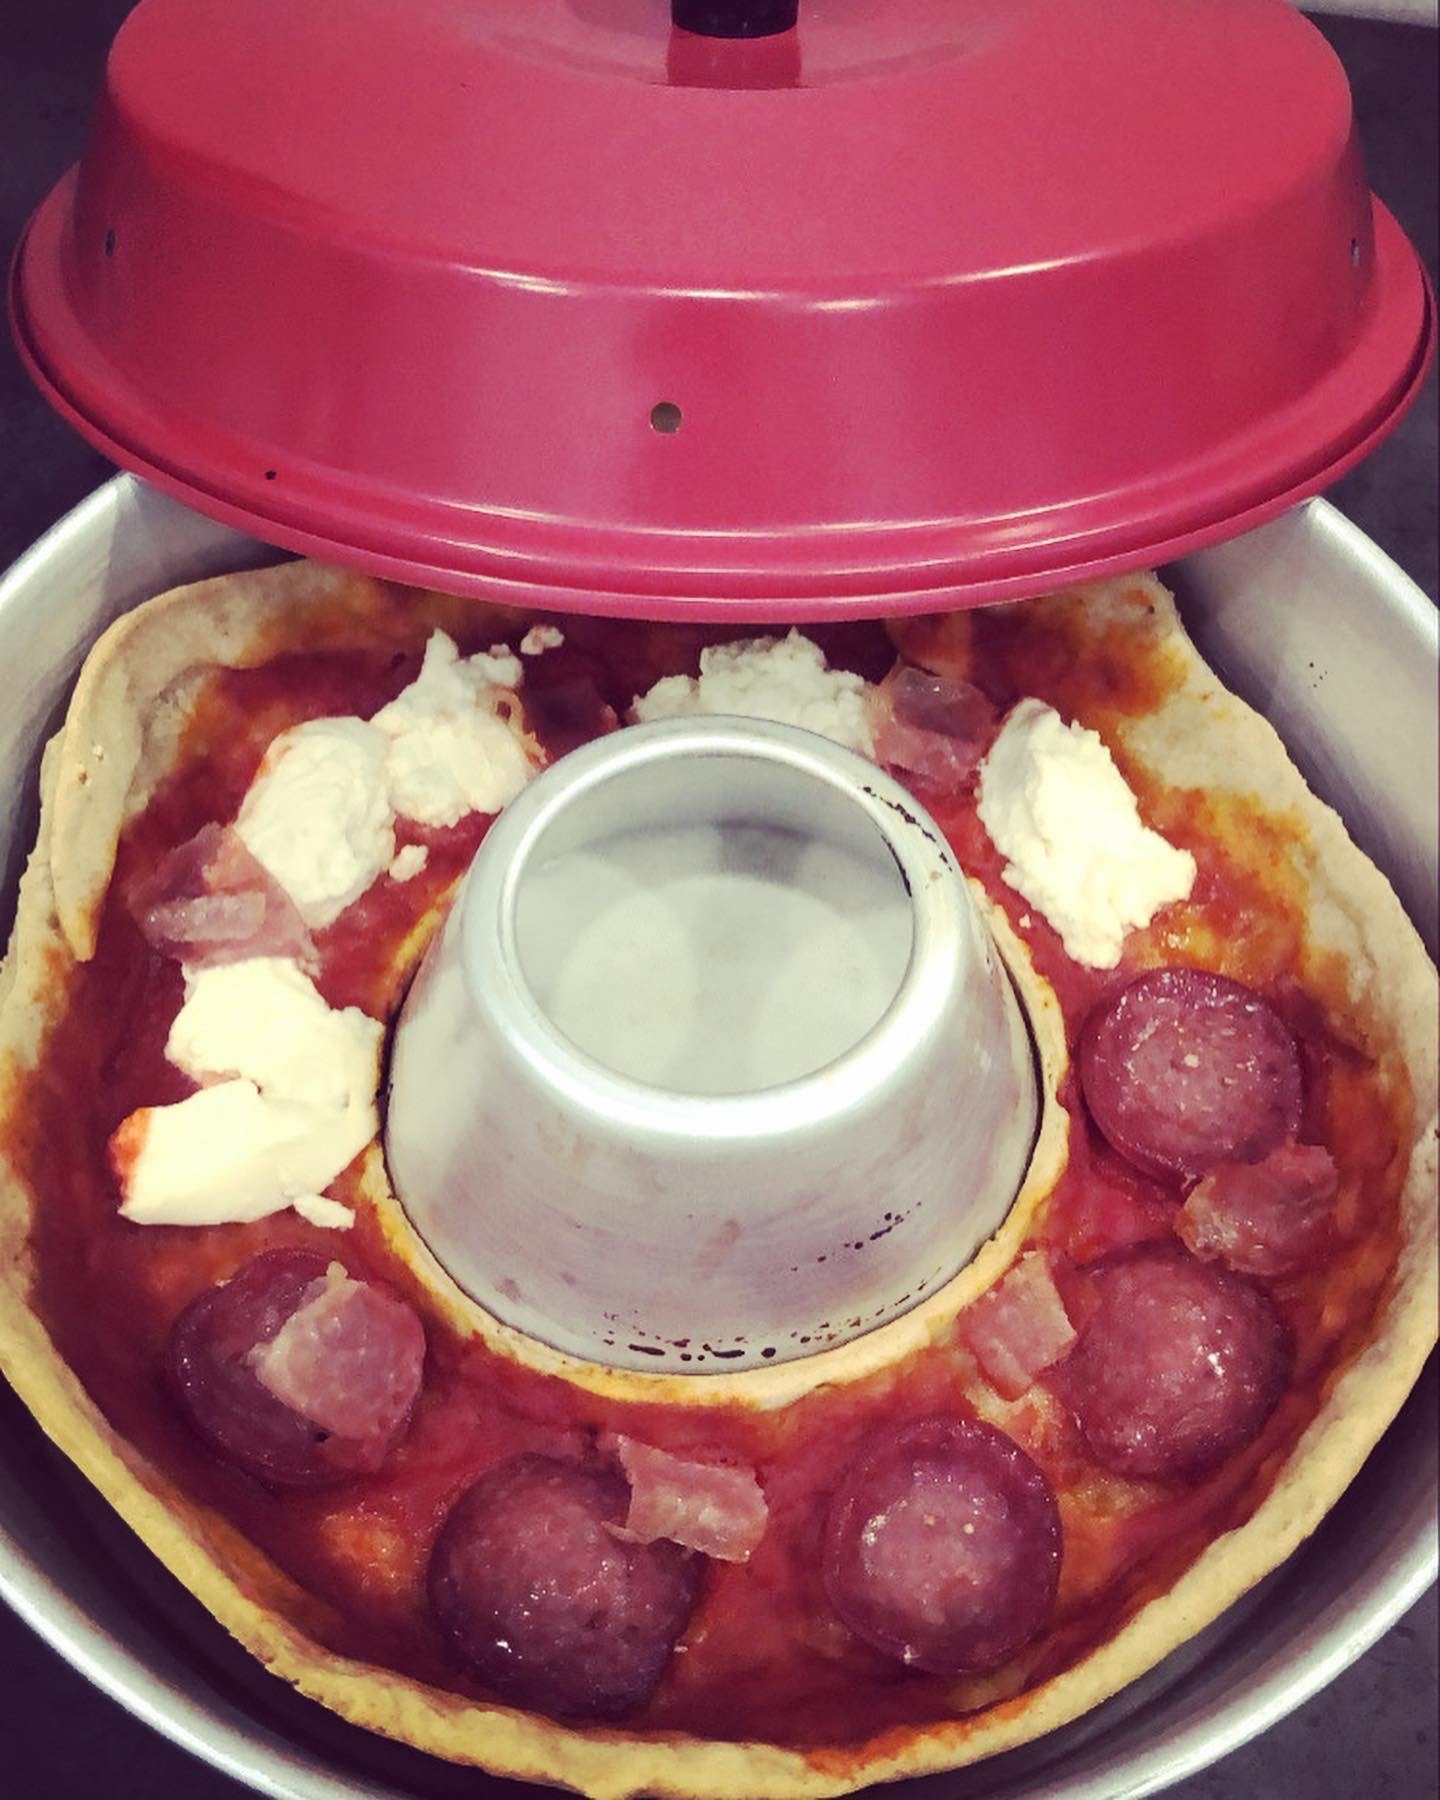 Campervan Recipe, PIZZA with omnia oven!